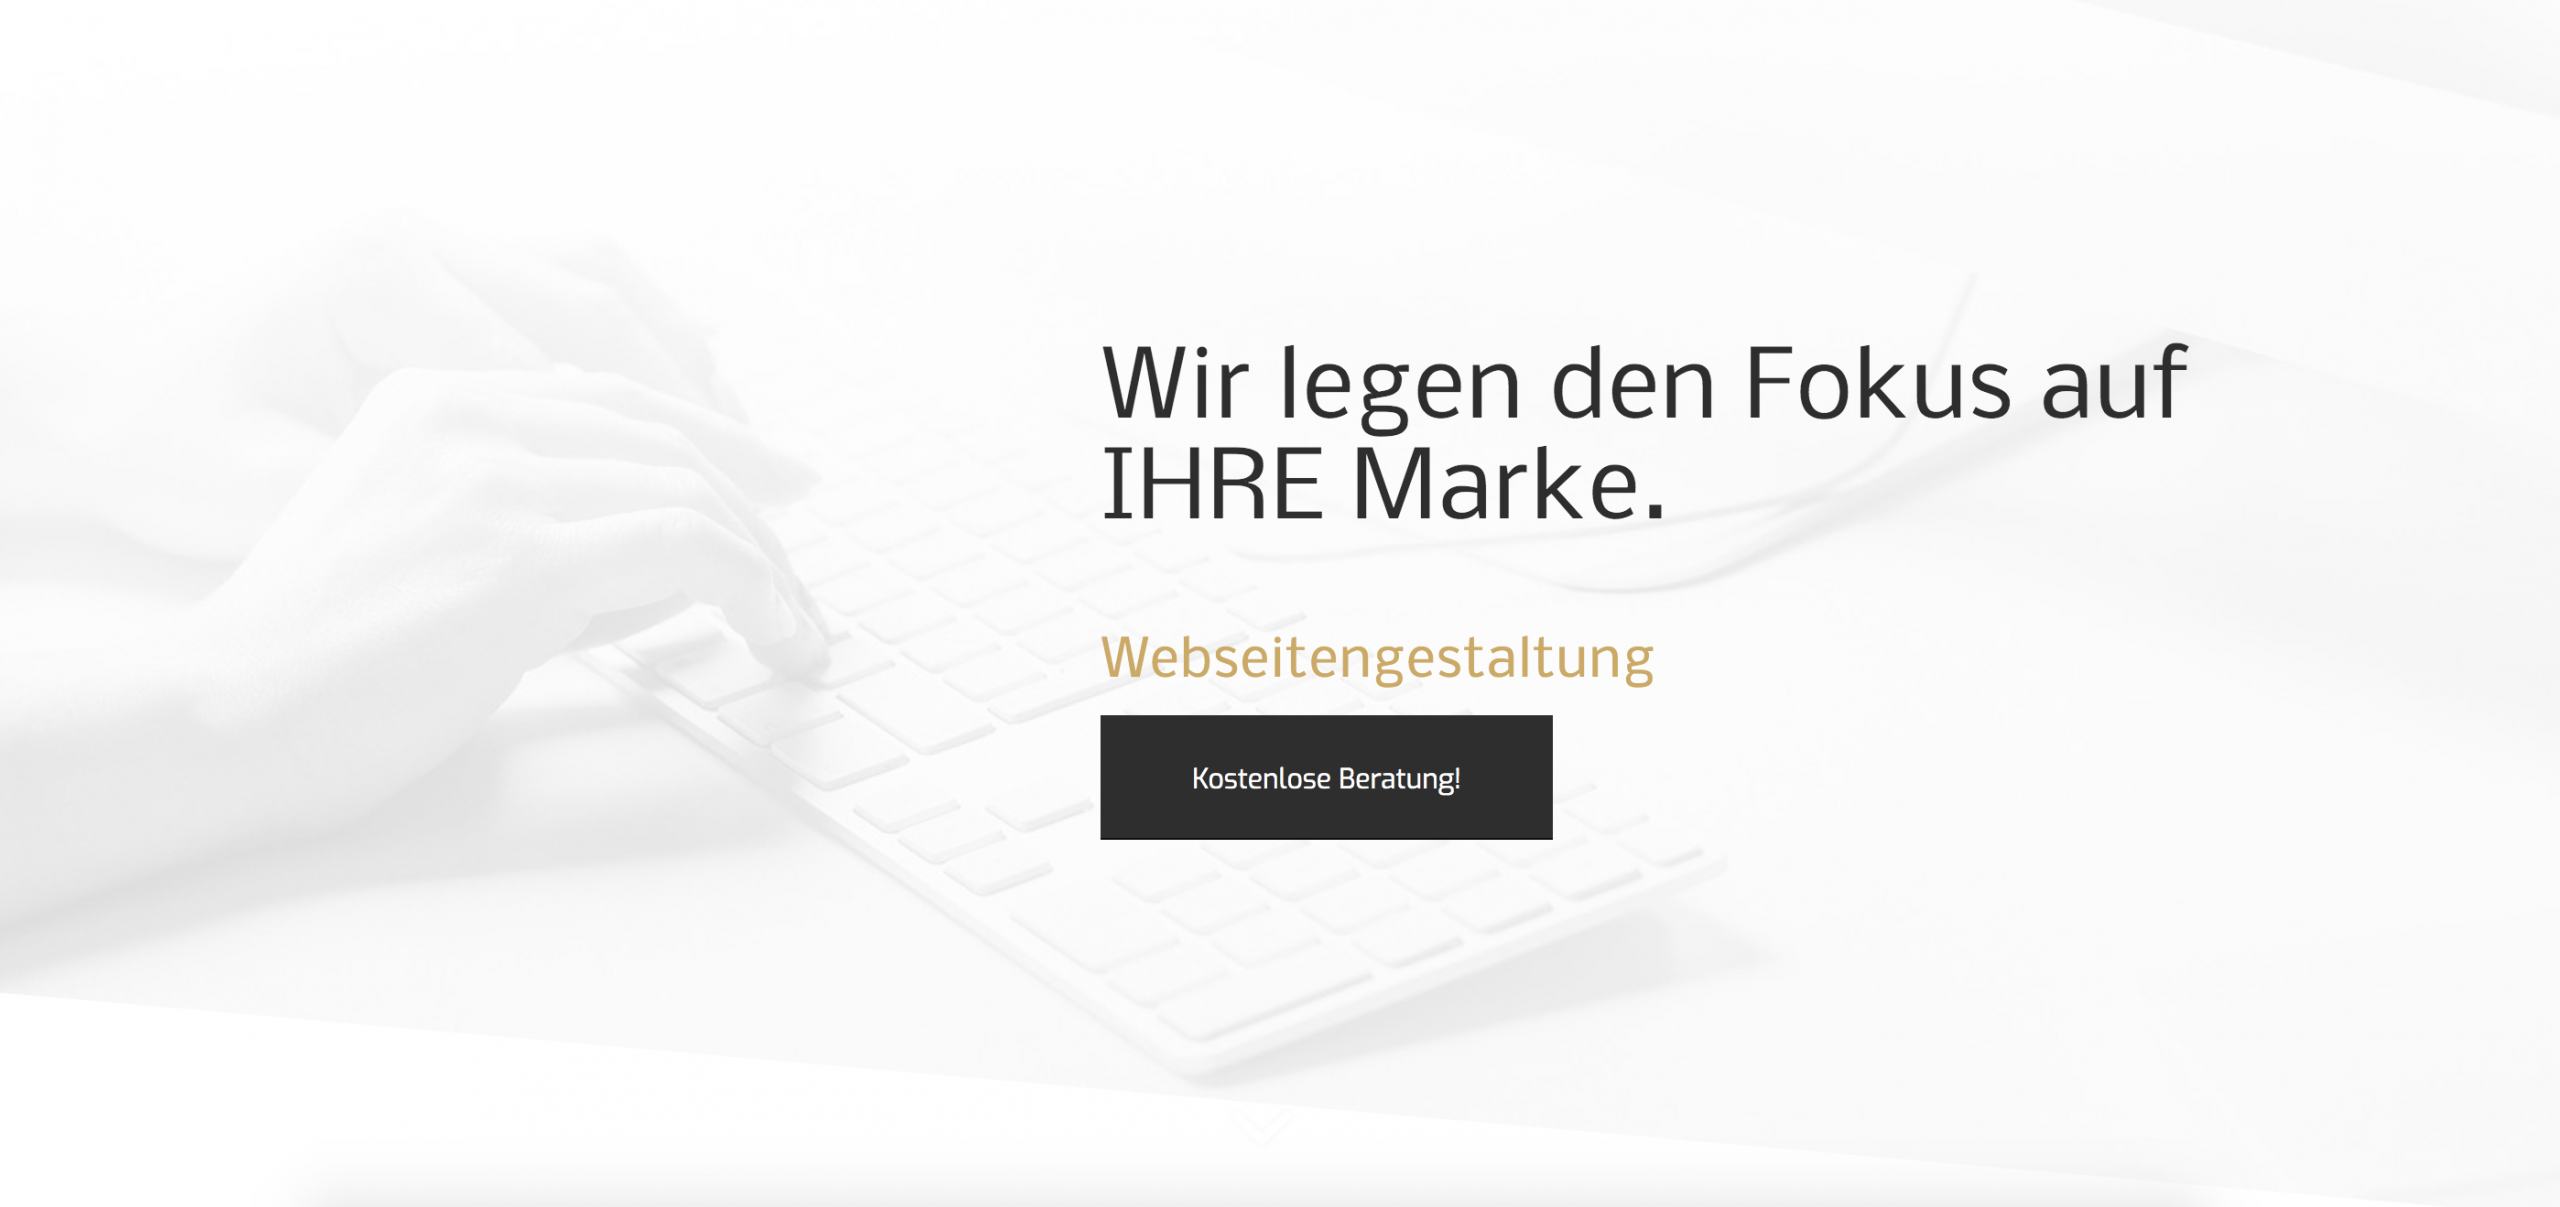 (c) Awebpresence.de